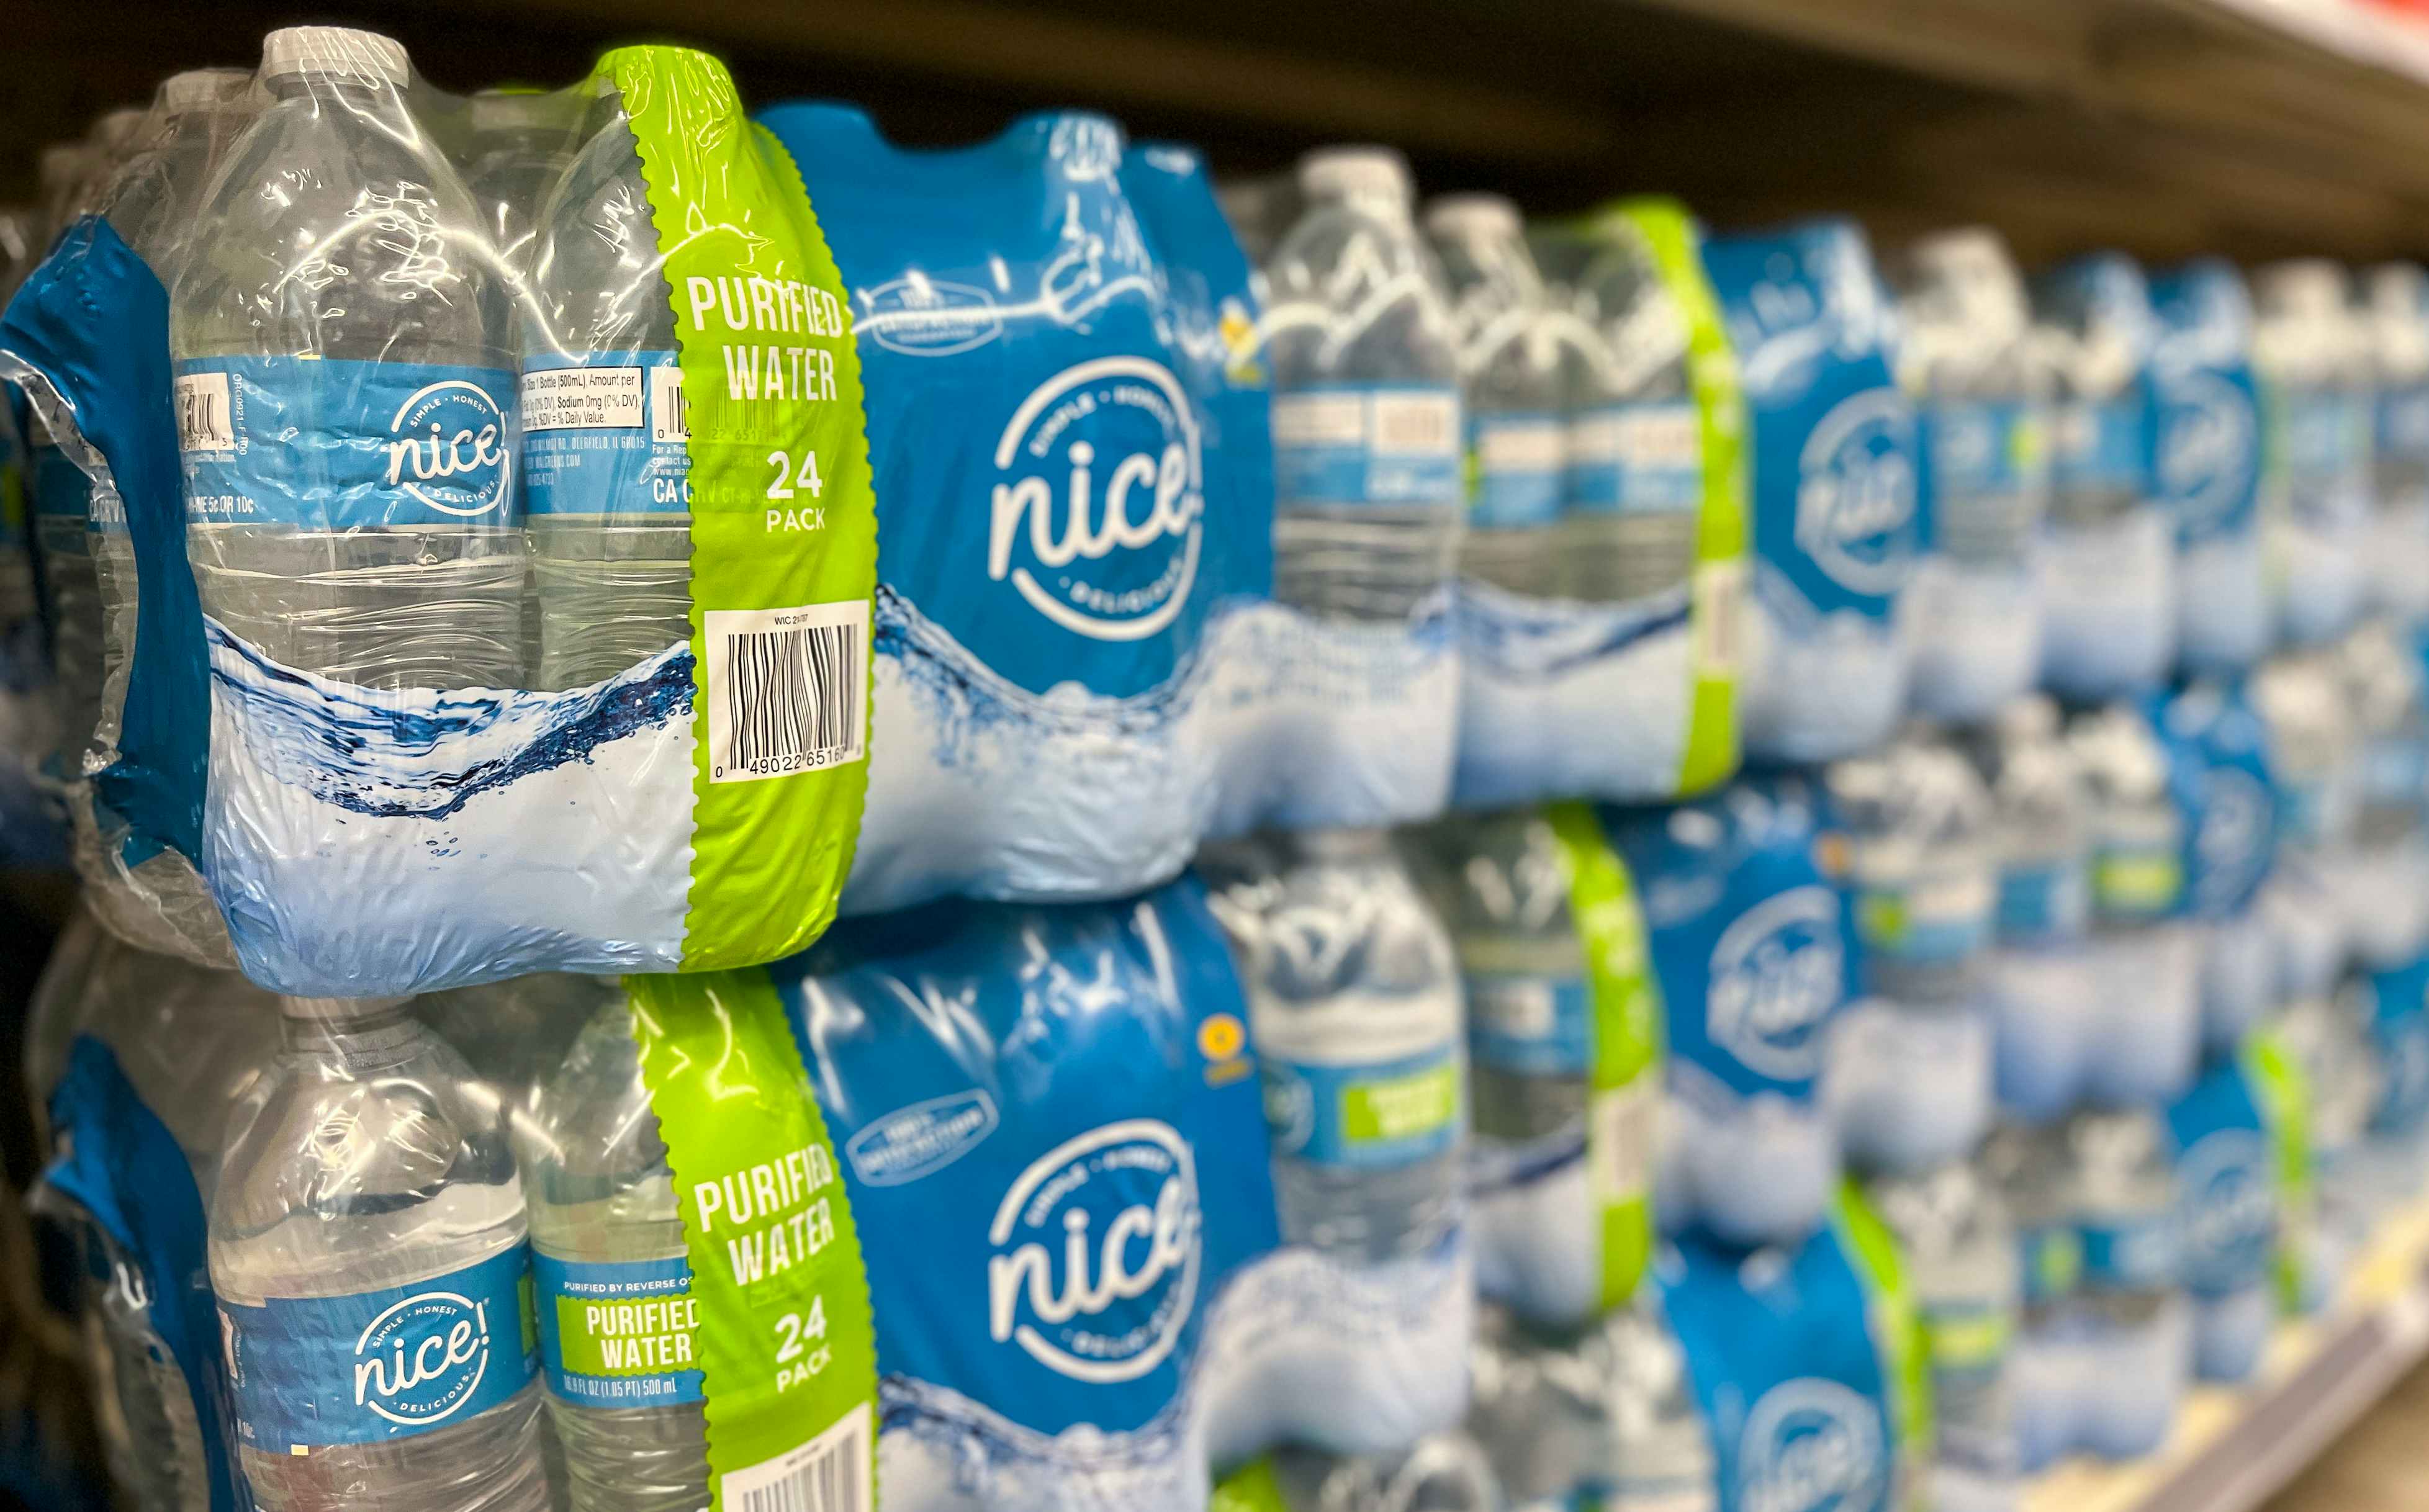 Water Bottle 24-Packs, as Low as $2.25 at Walgreens